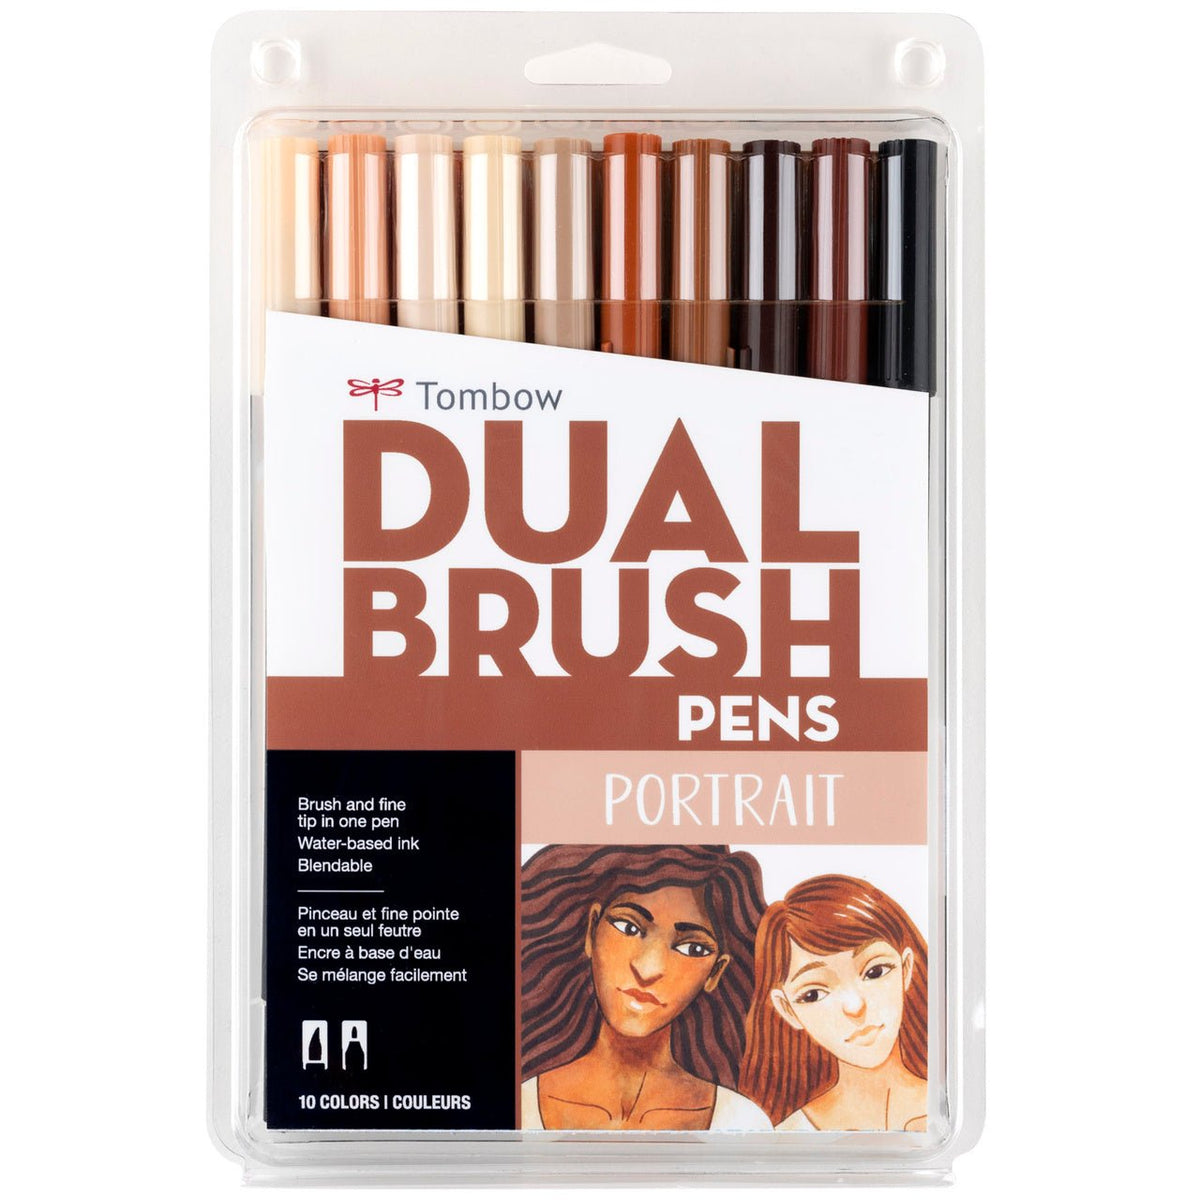 Dual Brush Pen Art Markers, 108 Colors, Brush Markers